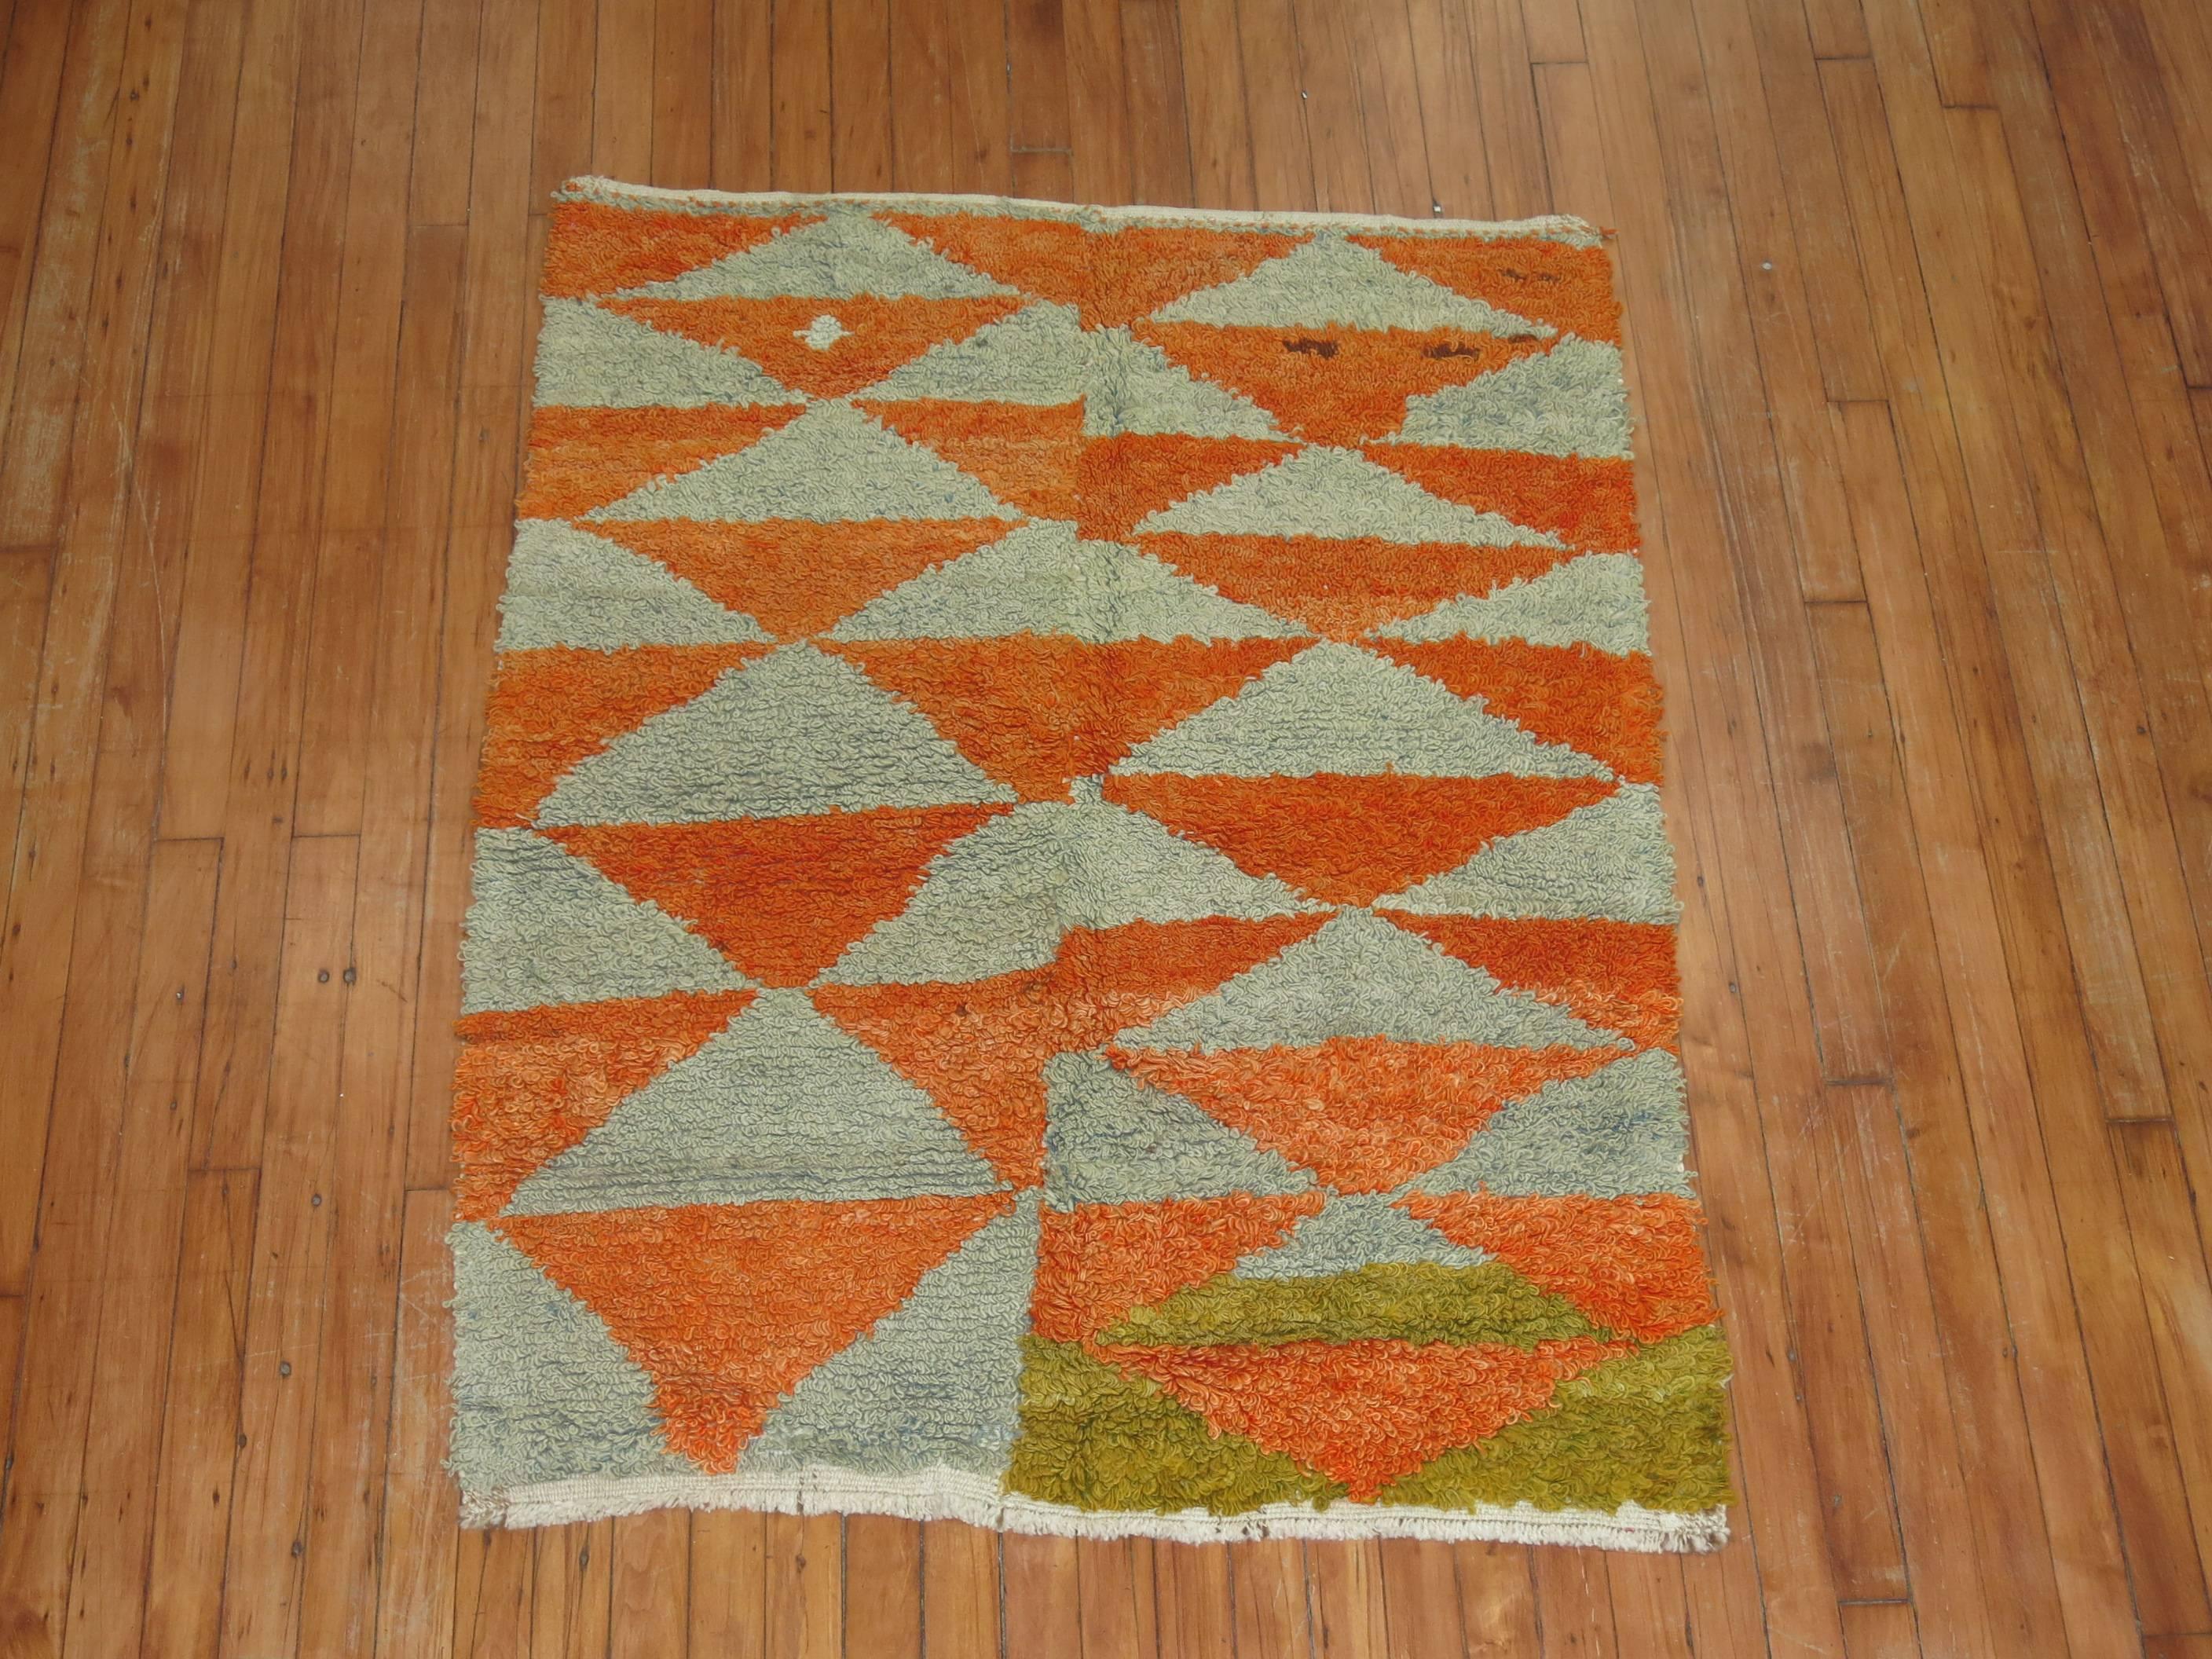 A Turkish Konya shag rug featuring an intense orange color, circa mid-20th century.

Measures: 3'4